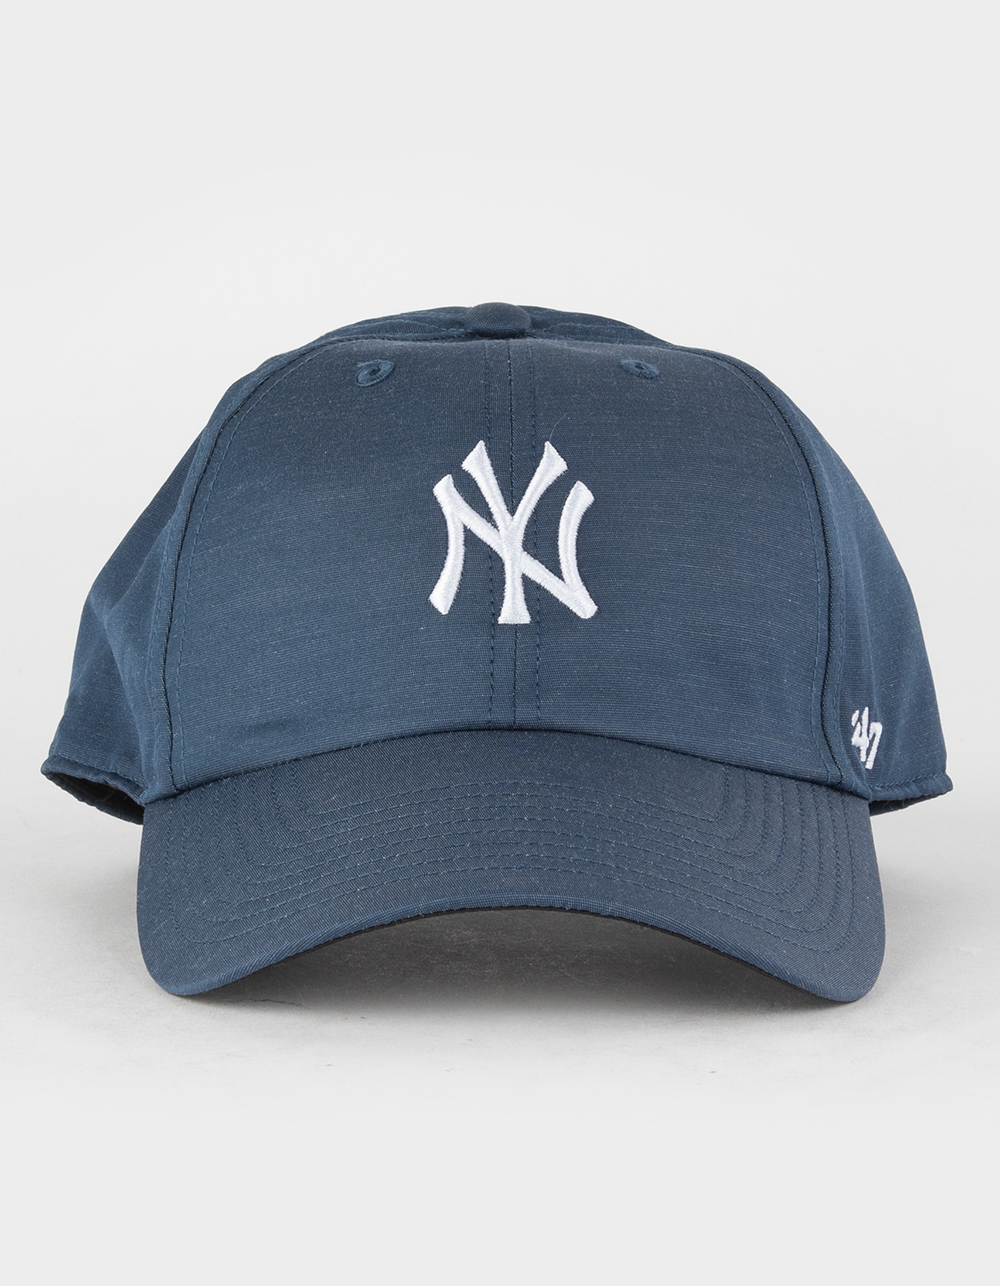 Vintage New York Yankees Casual Hat at